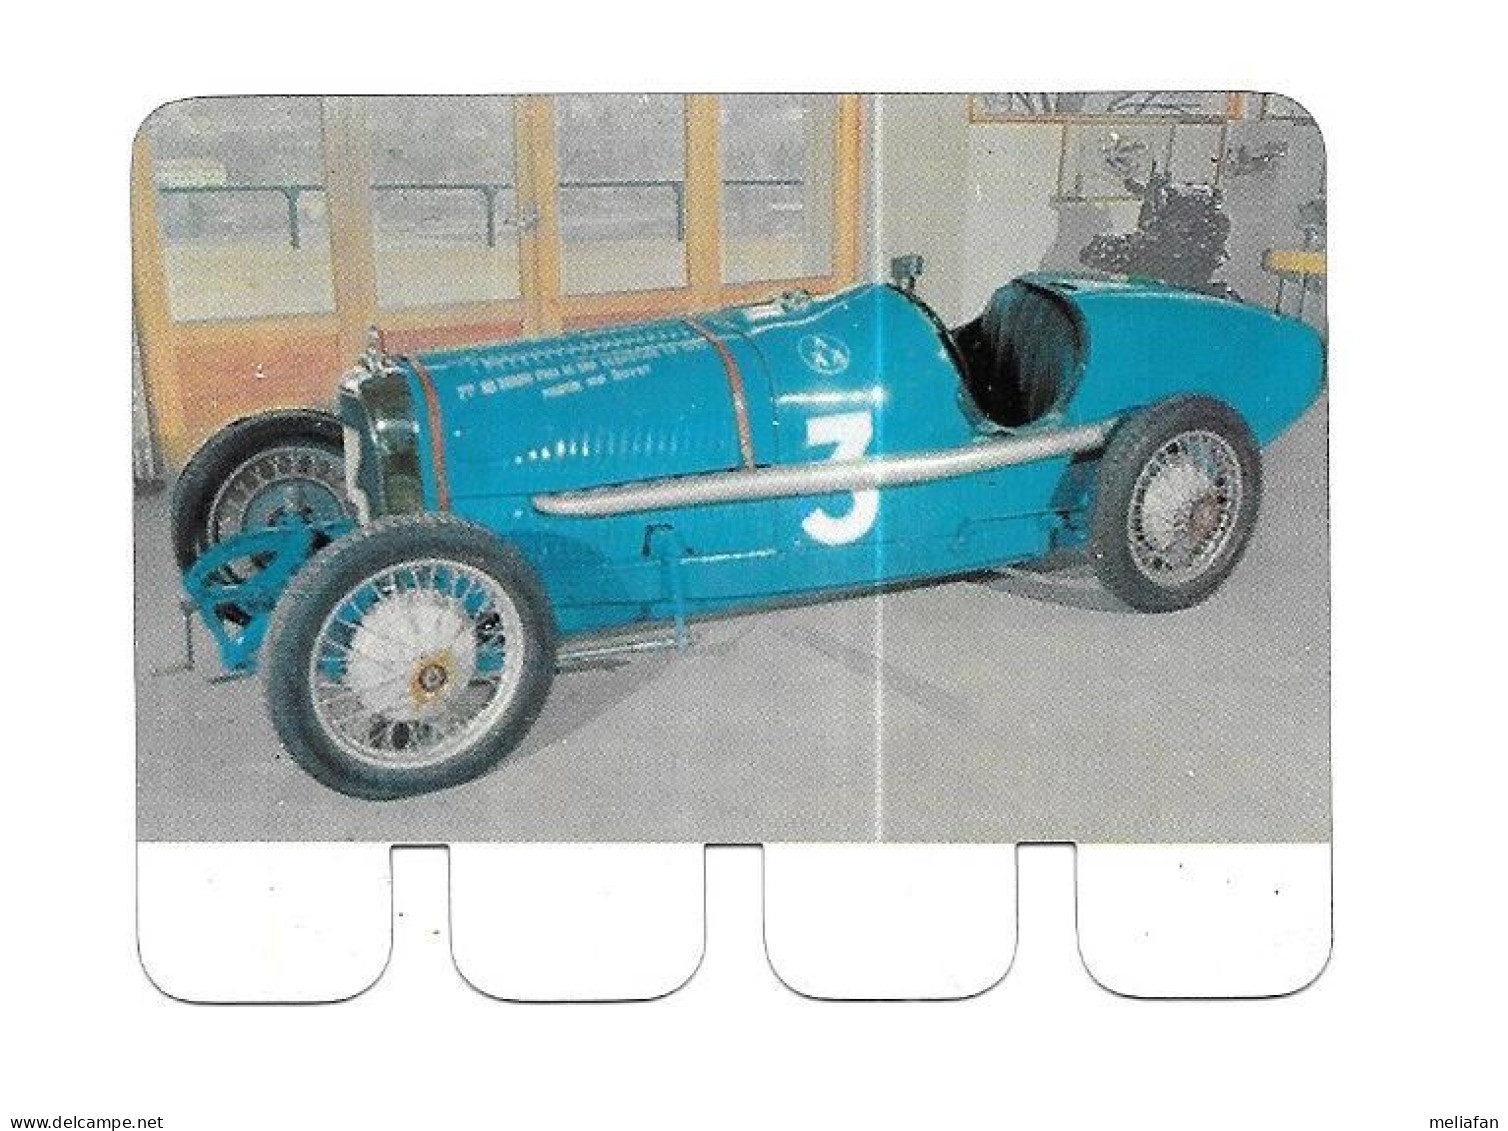 BL94 - IMAGE METALLIQUE COOP - ROLLAND PILAIN 1923 - Autorennen - F1